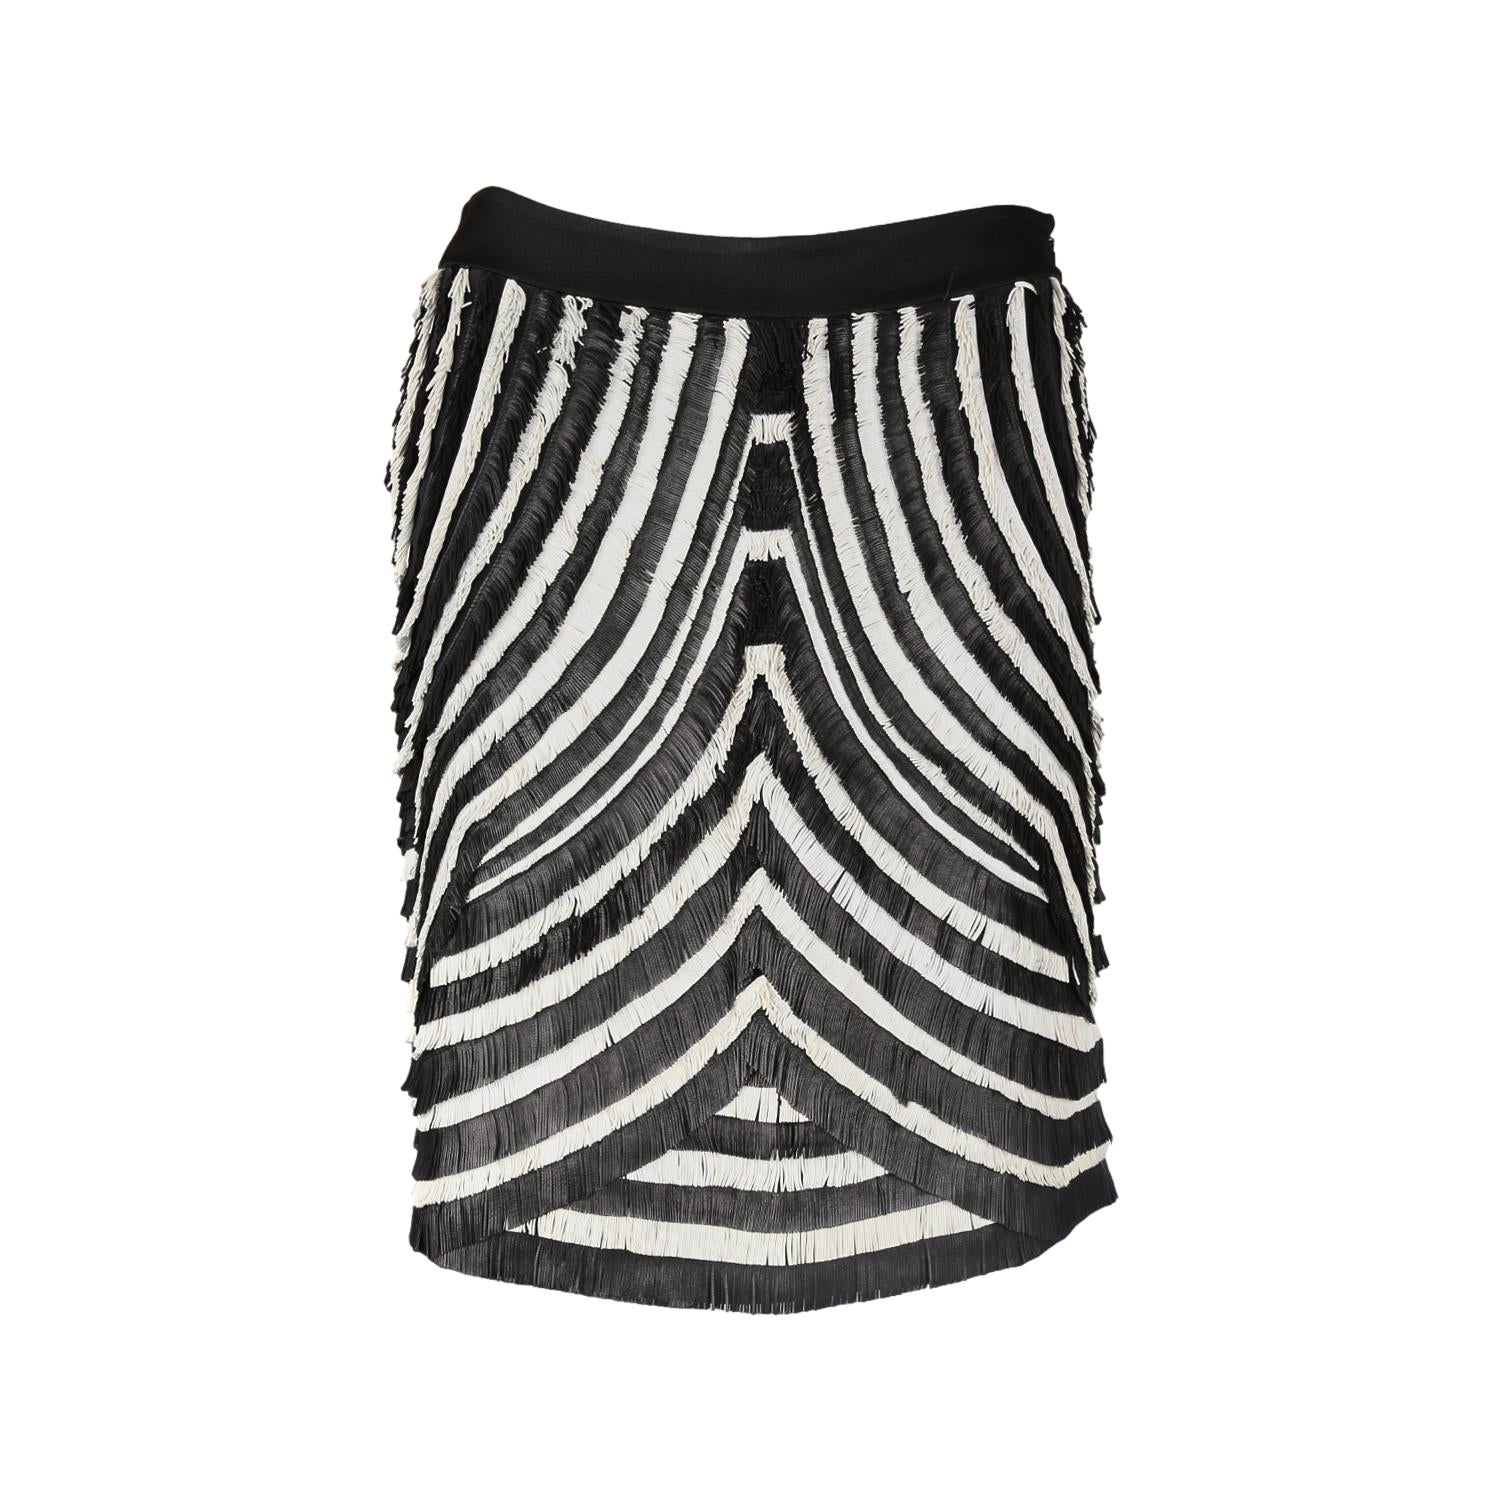 Gucci Zebra Fringe Skirt - Apparel